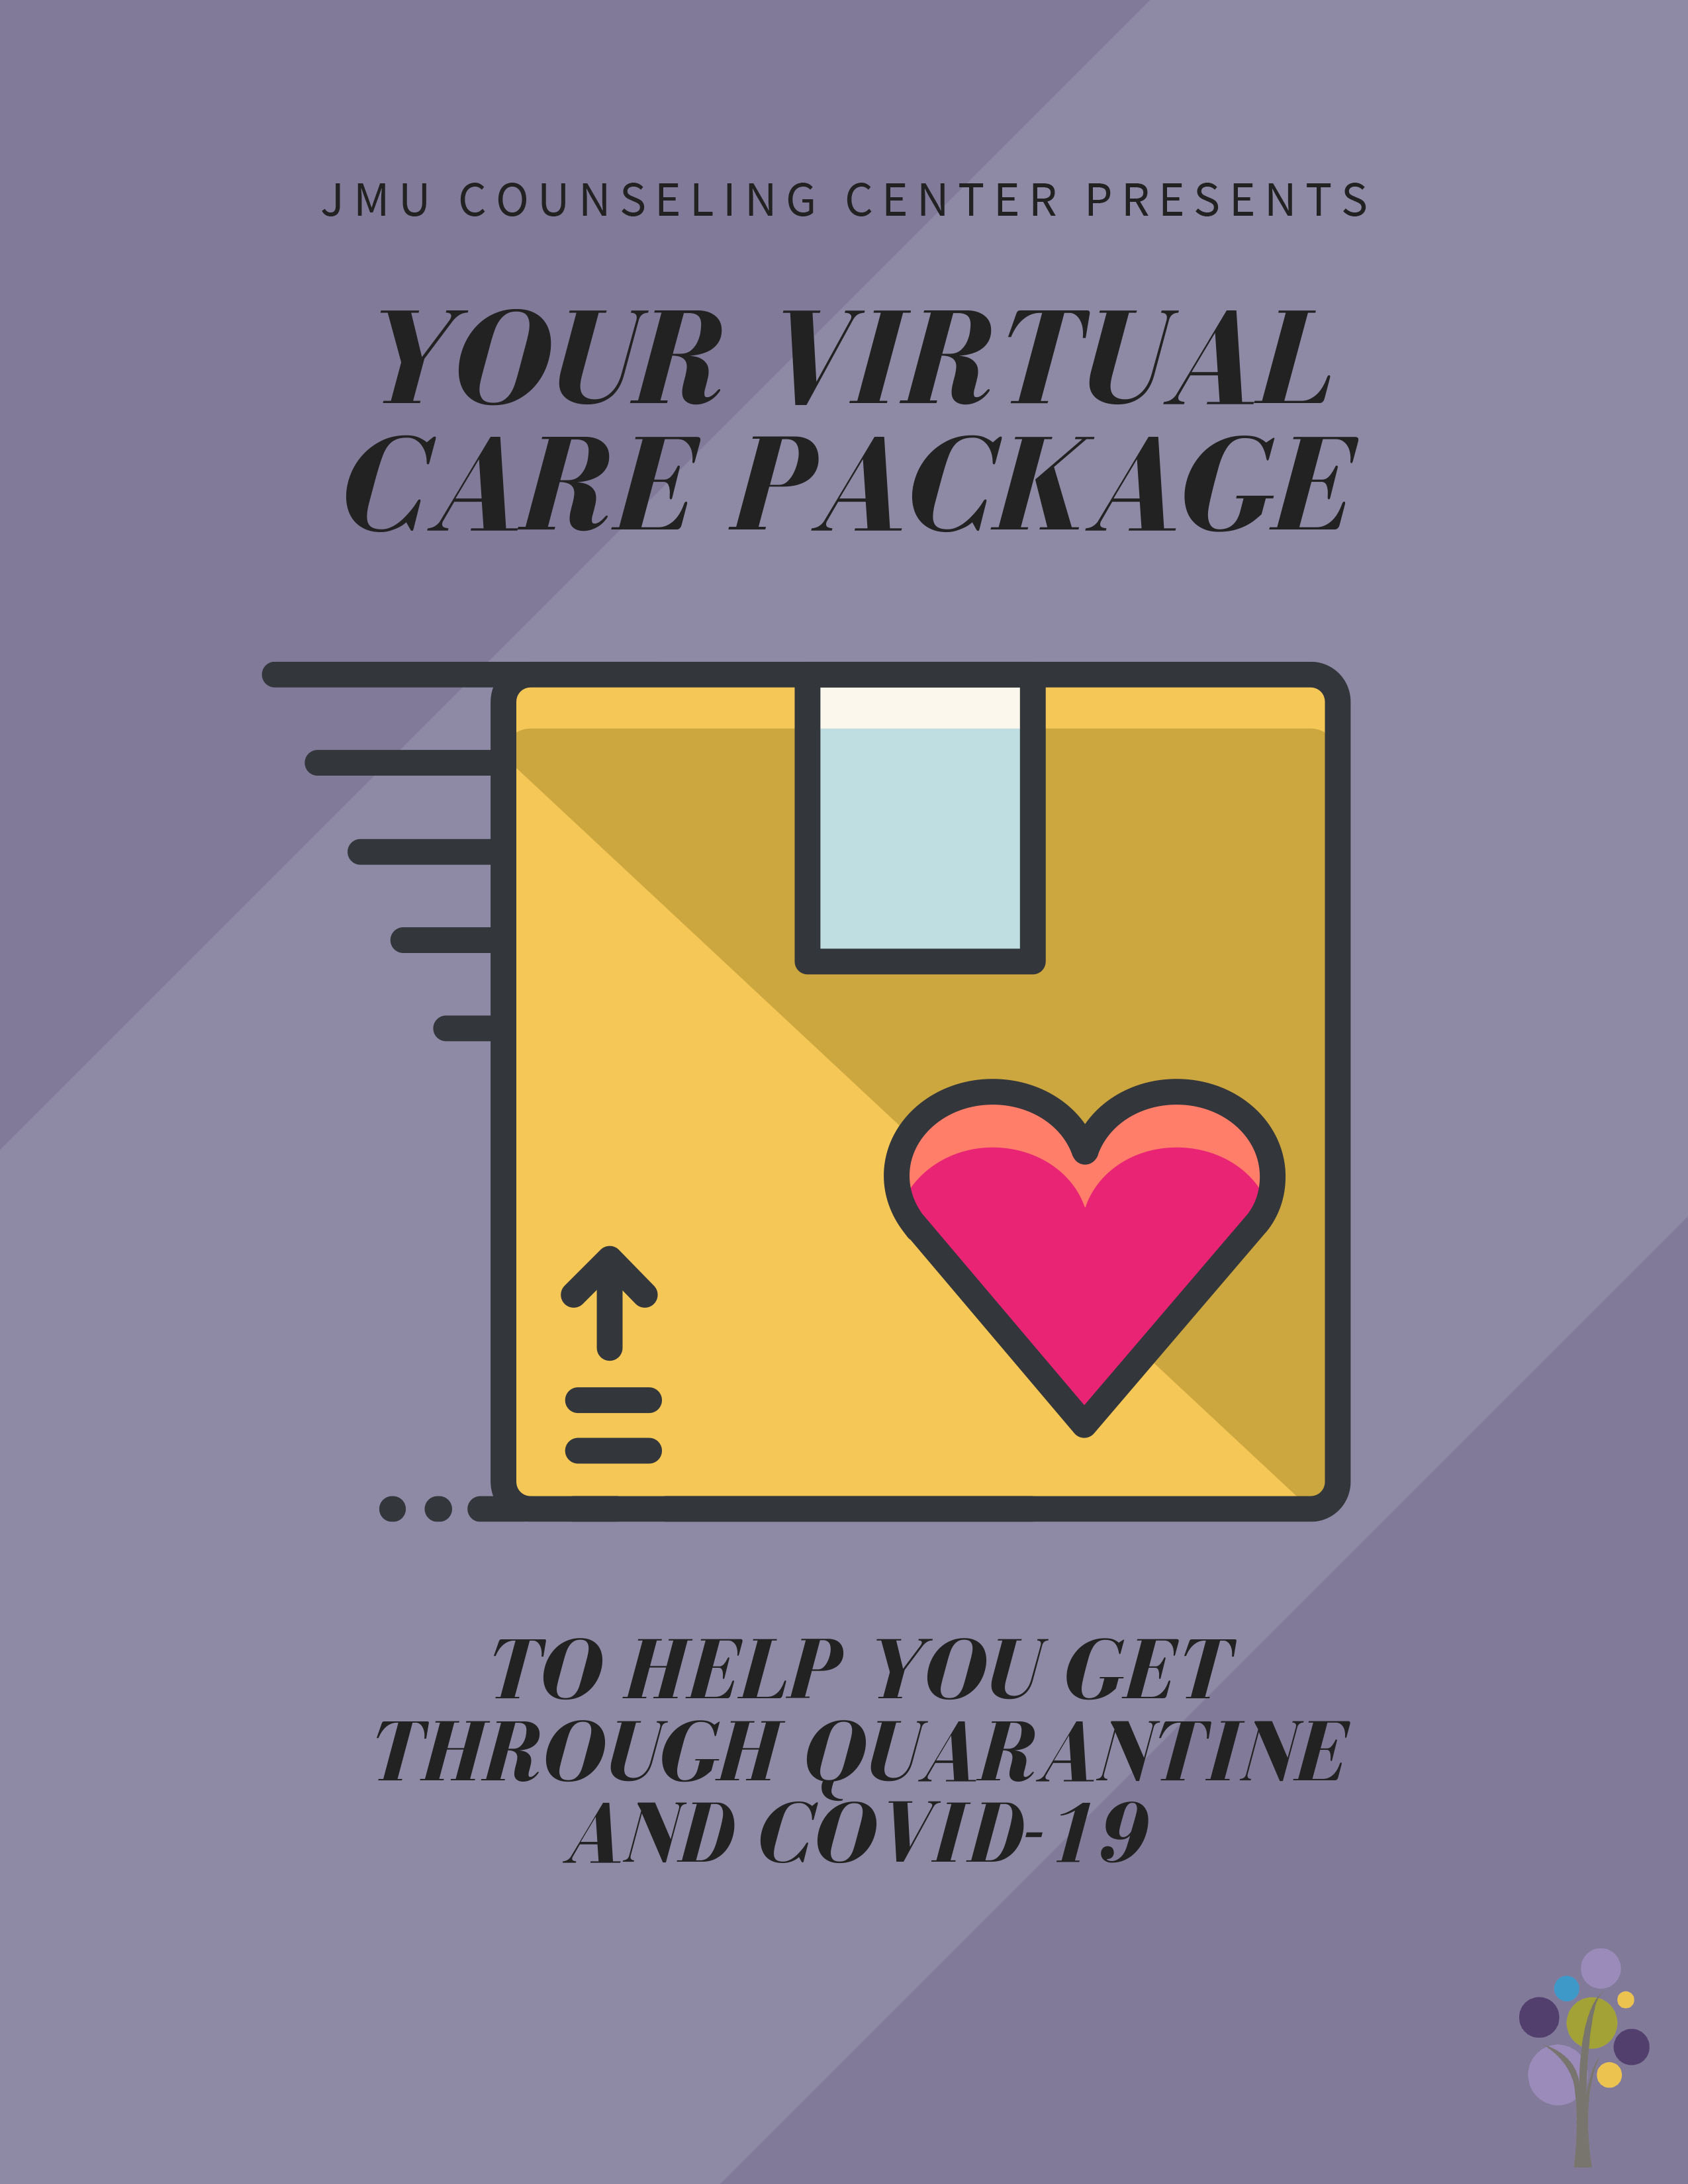 JMU_CC_Virtual_Care_Package_image.jpg